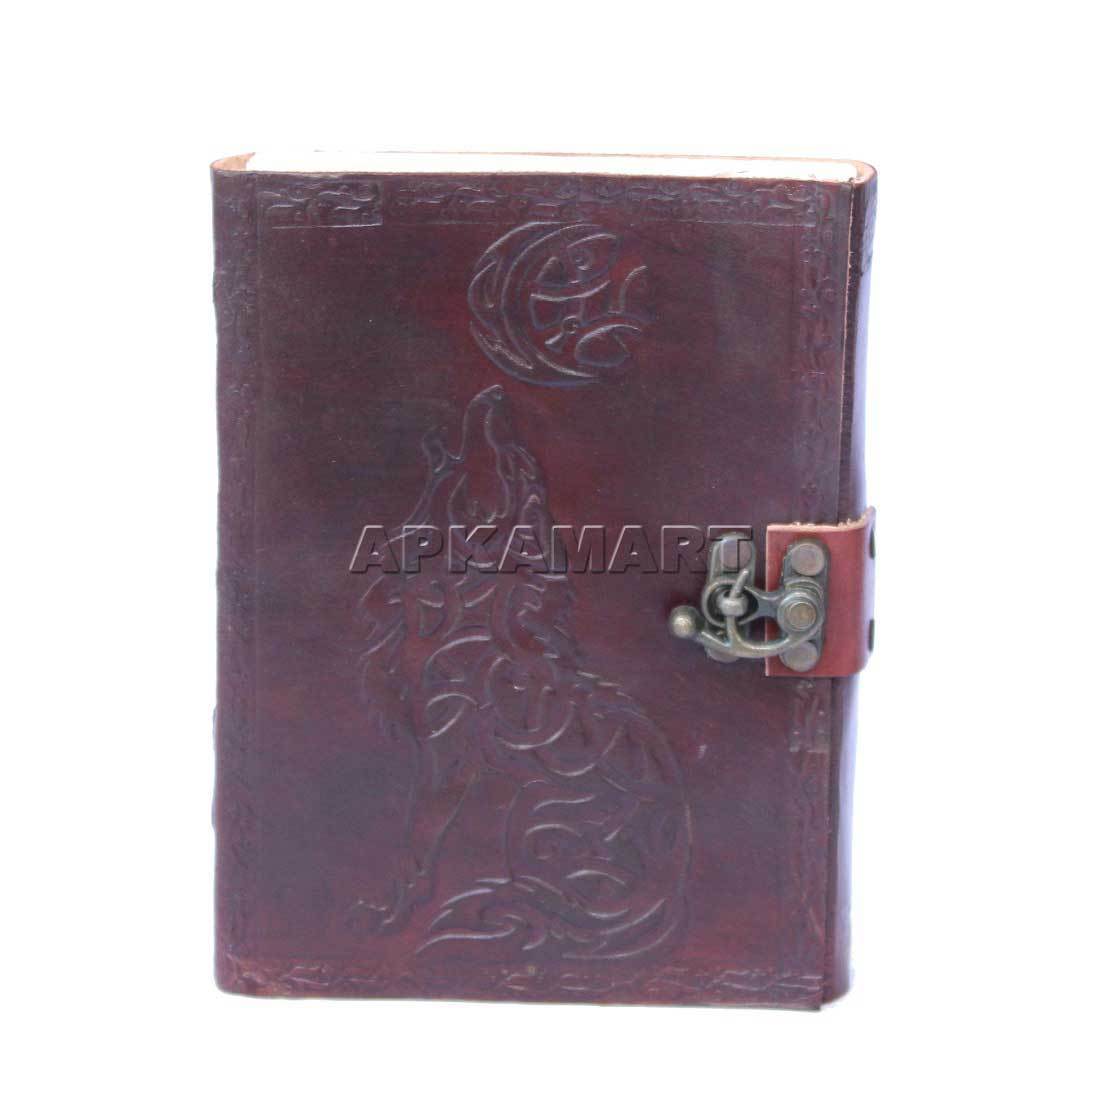 Leather Bound Journal for Men - Writing Journals for Women  -7 inch - ApkaMart